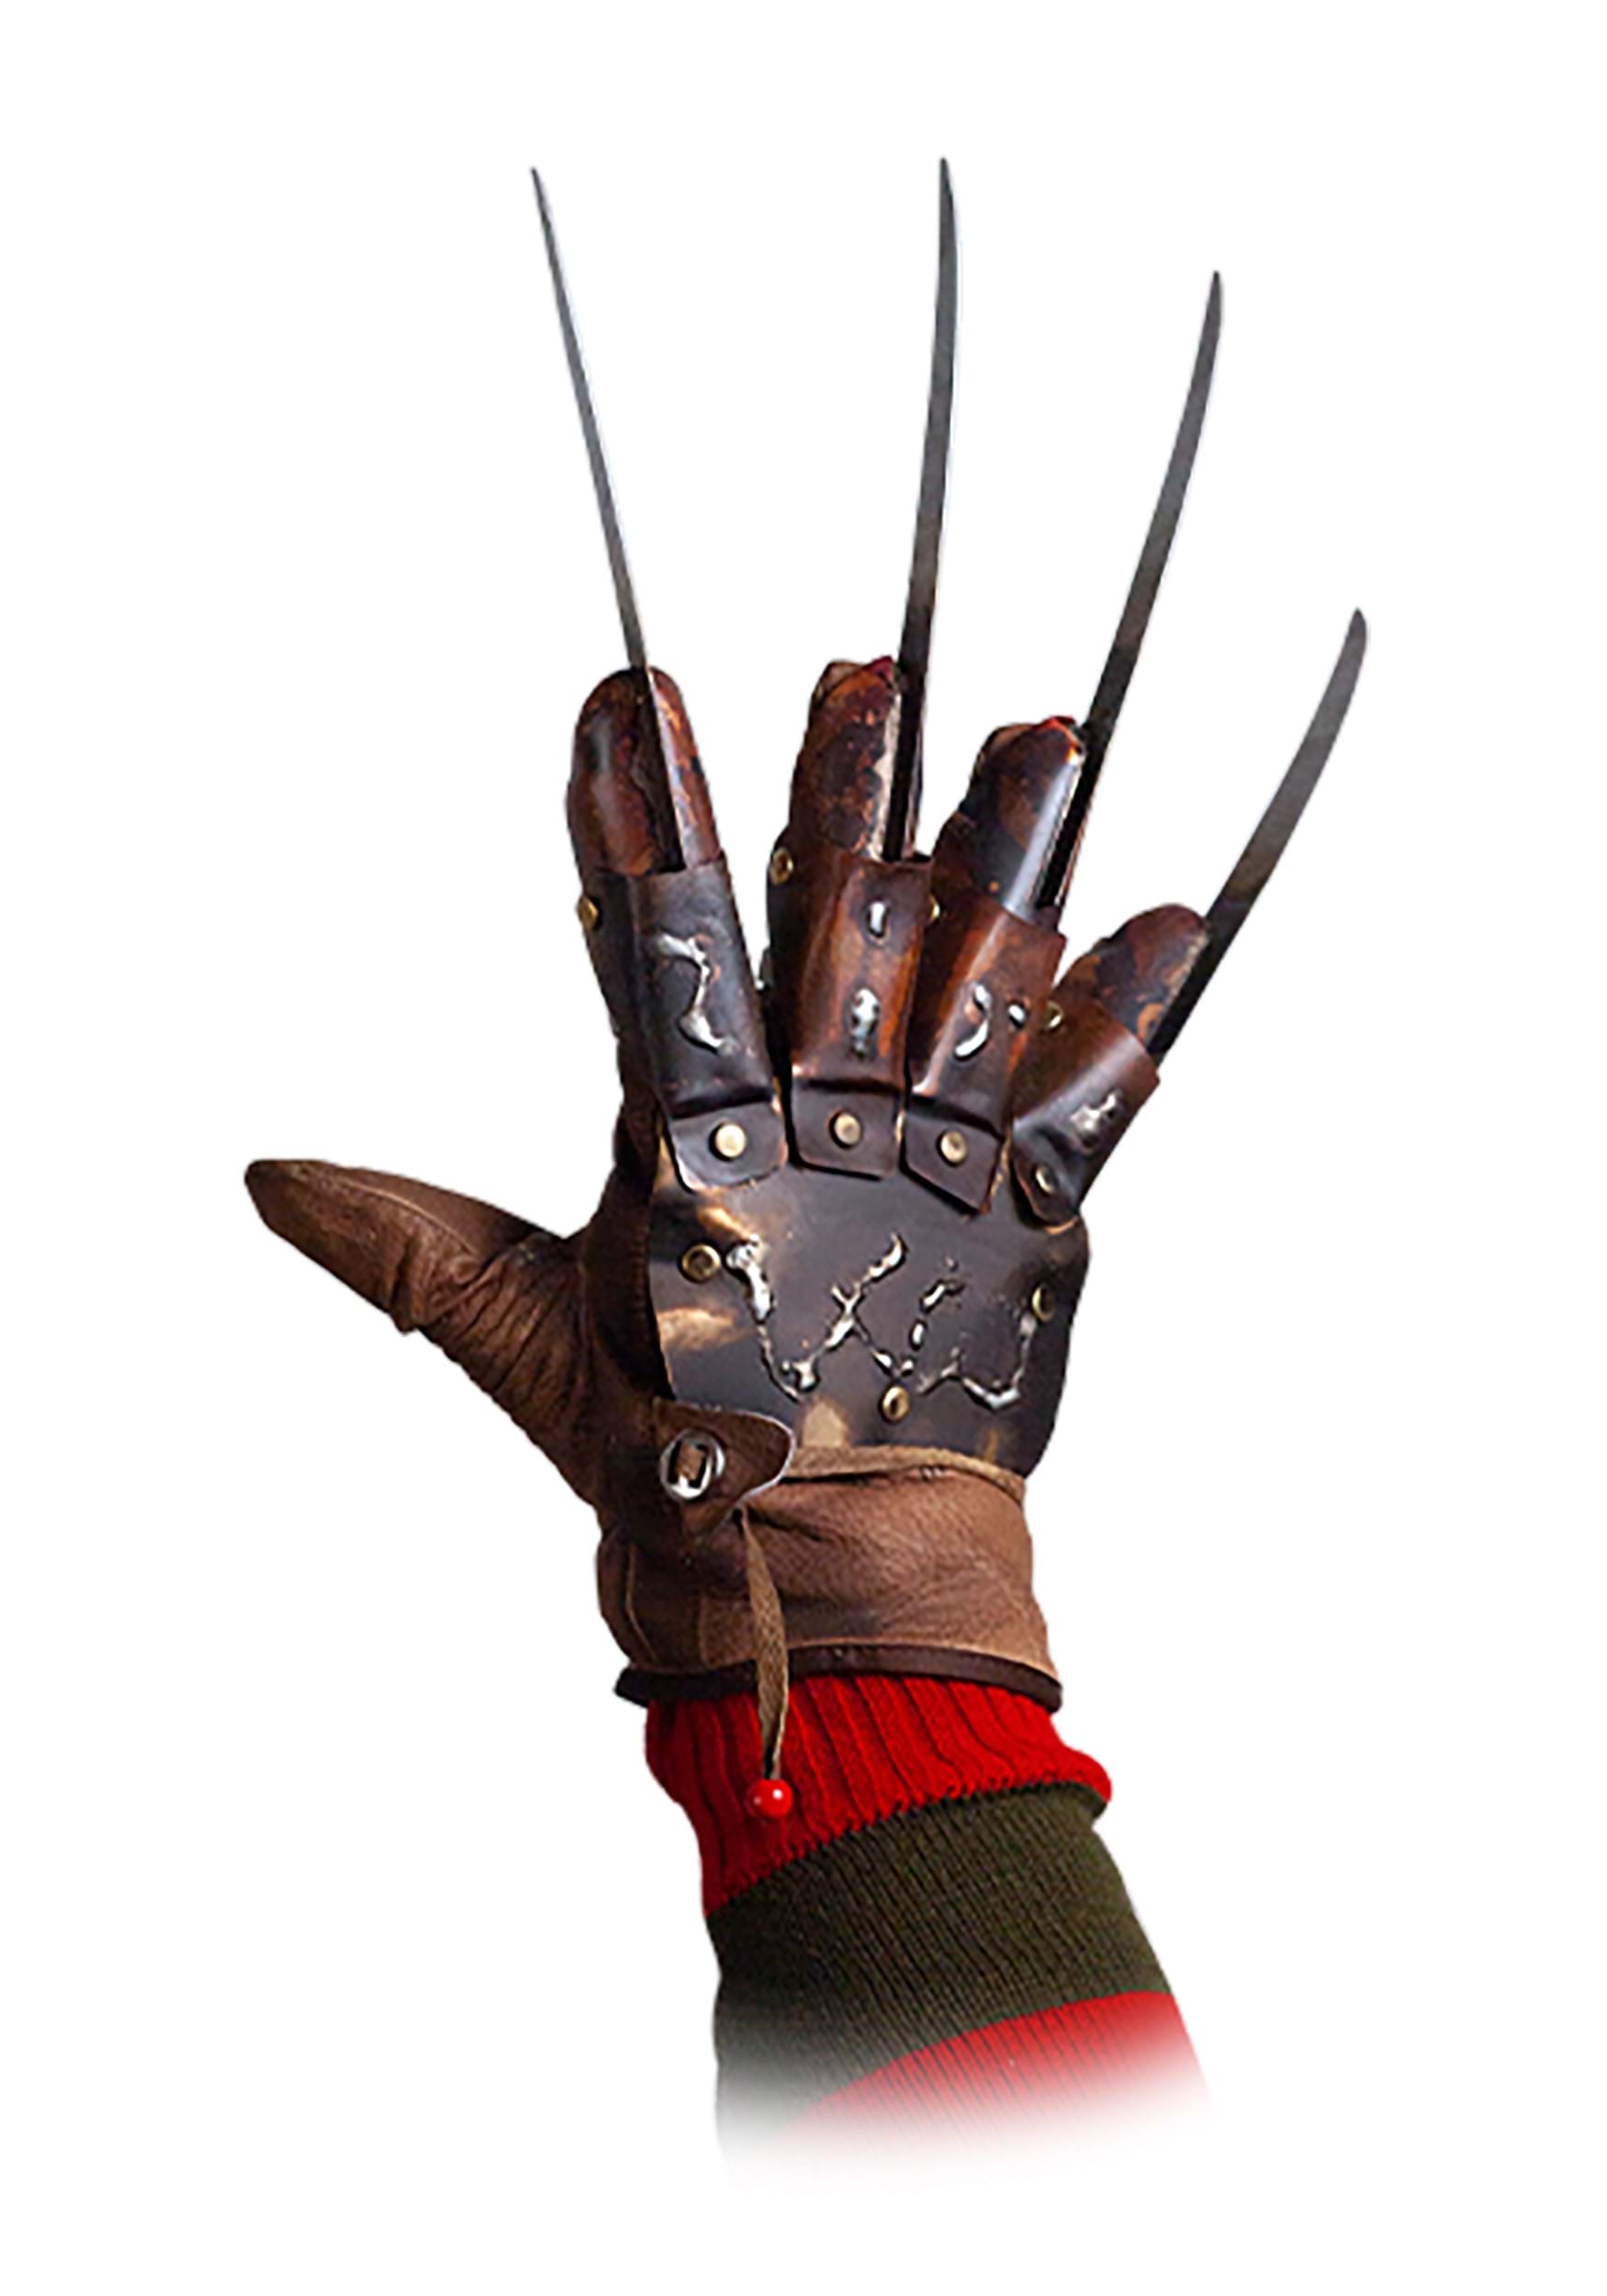 A Nightmare on Elm Street Dream Master Glove